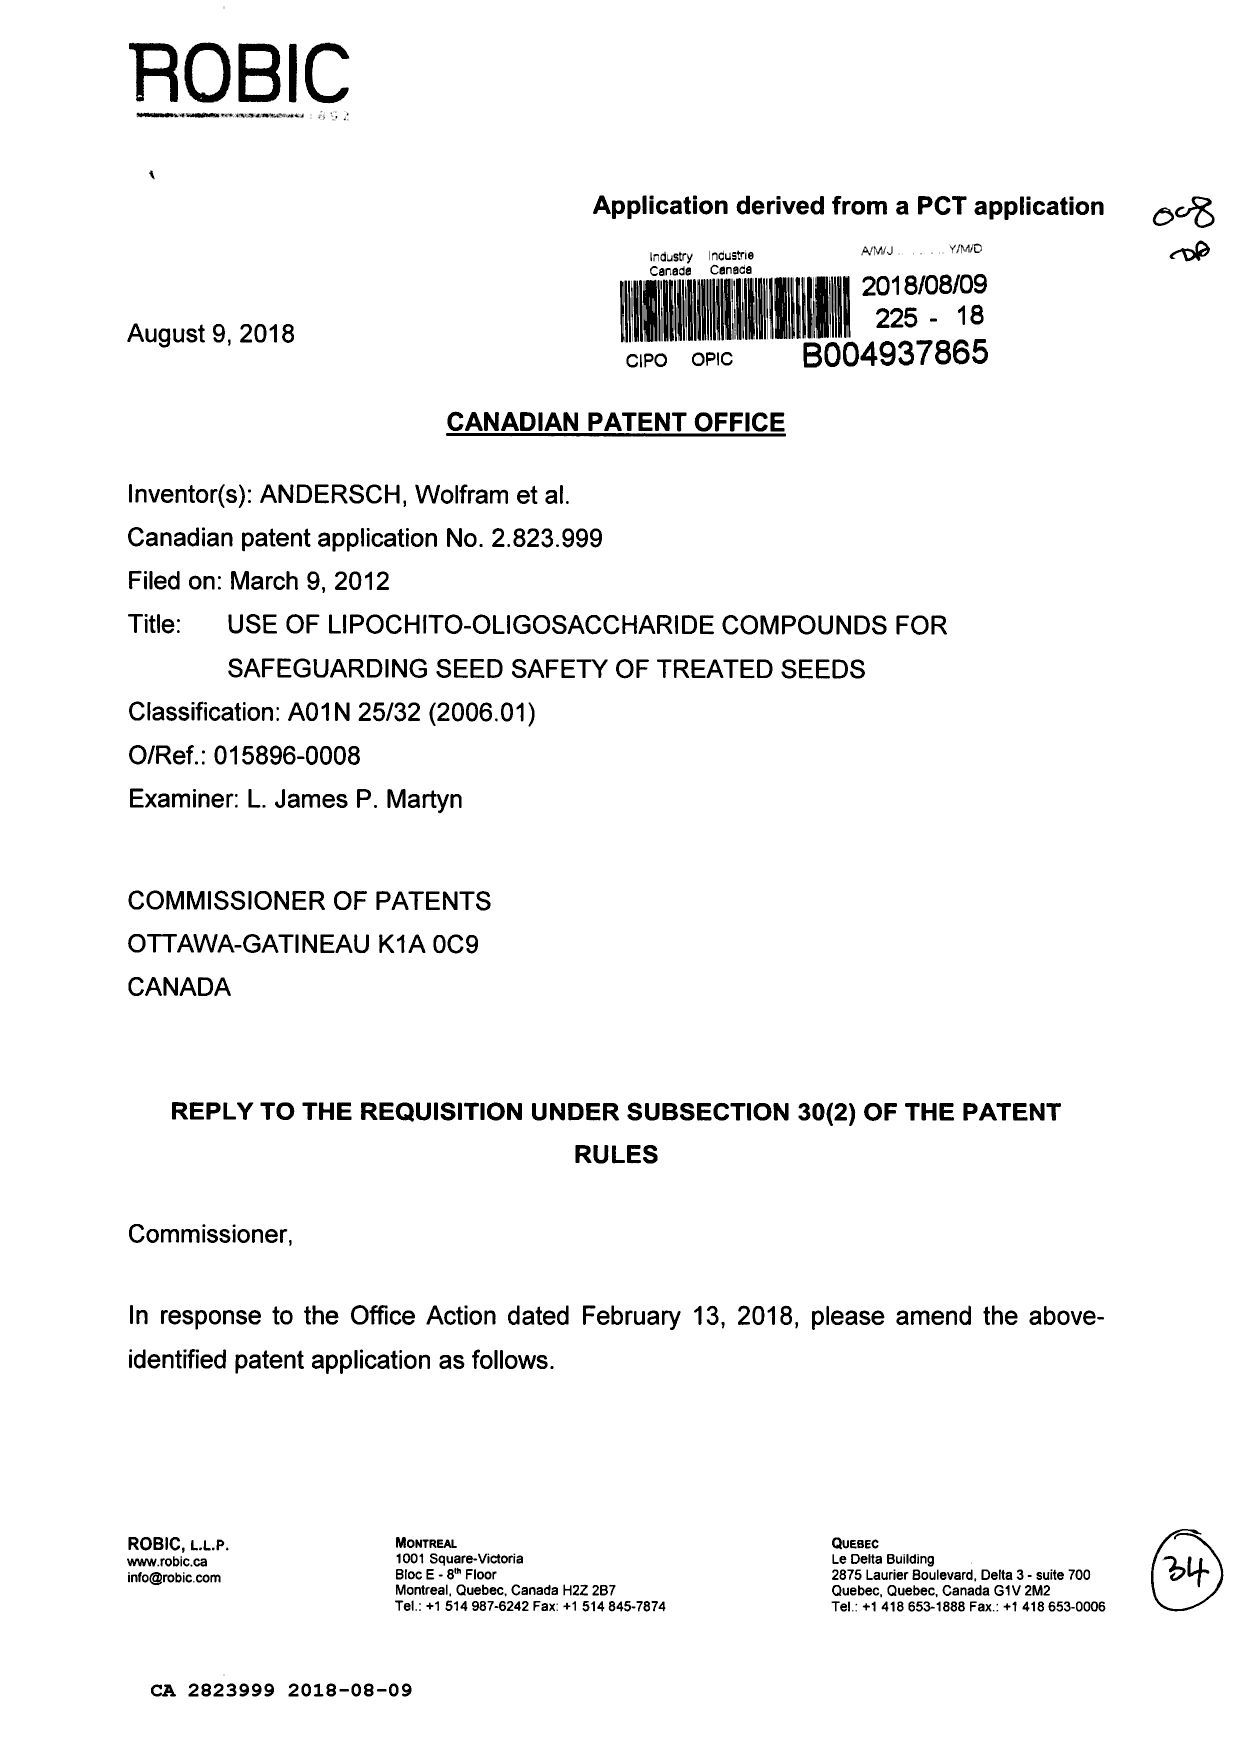 Canadian Patent Document 2823999. Amendment 20180809. Image 1 of 34